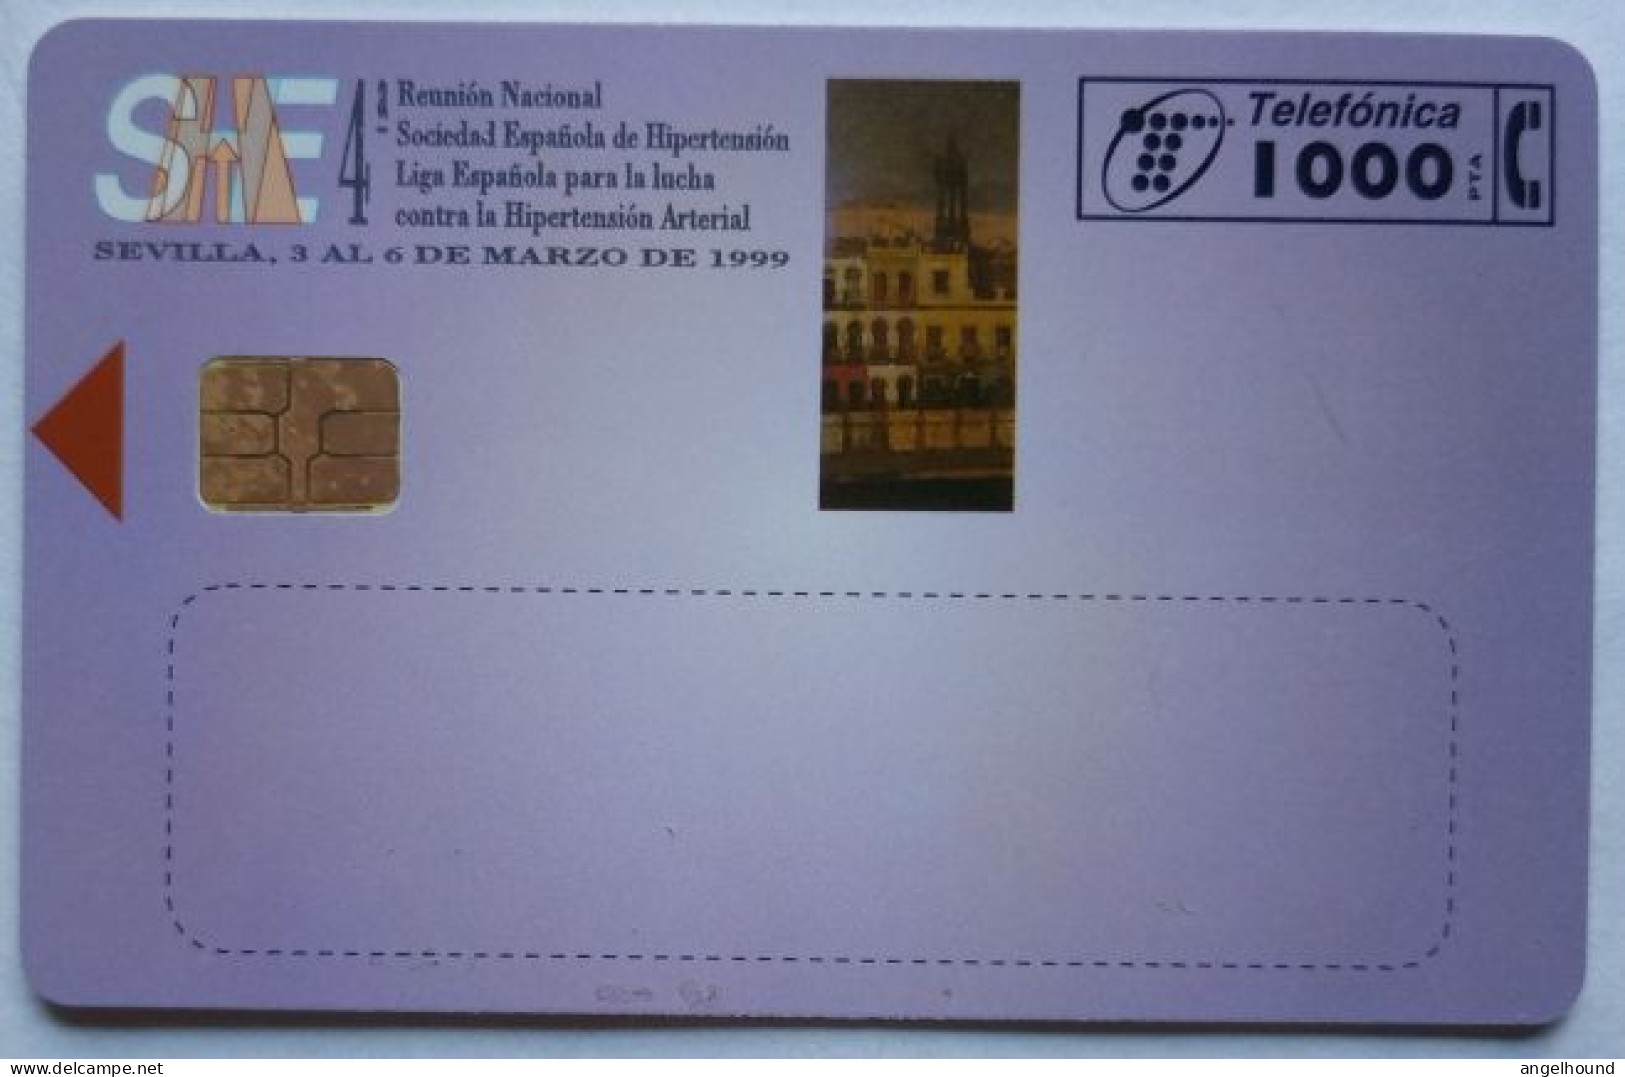 Spain 1000 Pta. Chip Card - 25 Anniversario SHE - 4a Reunion Nacional - Emisiones Básicas